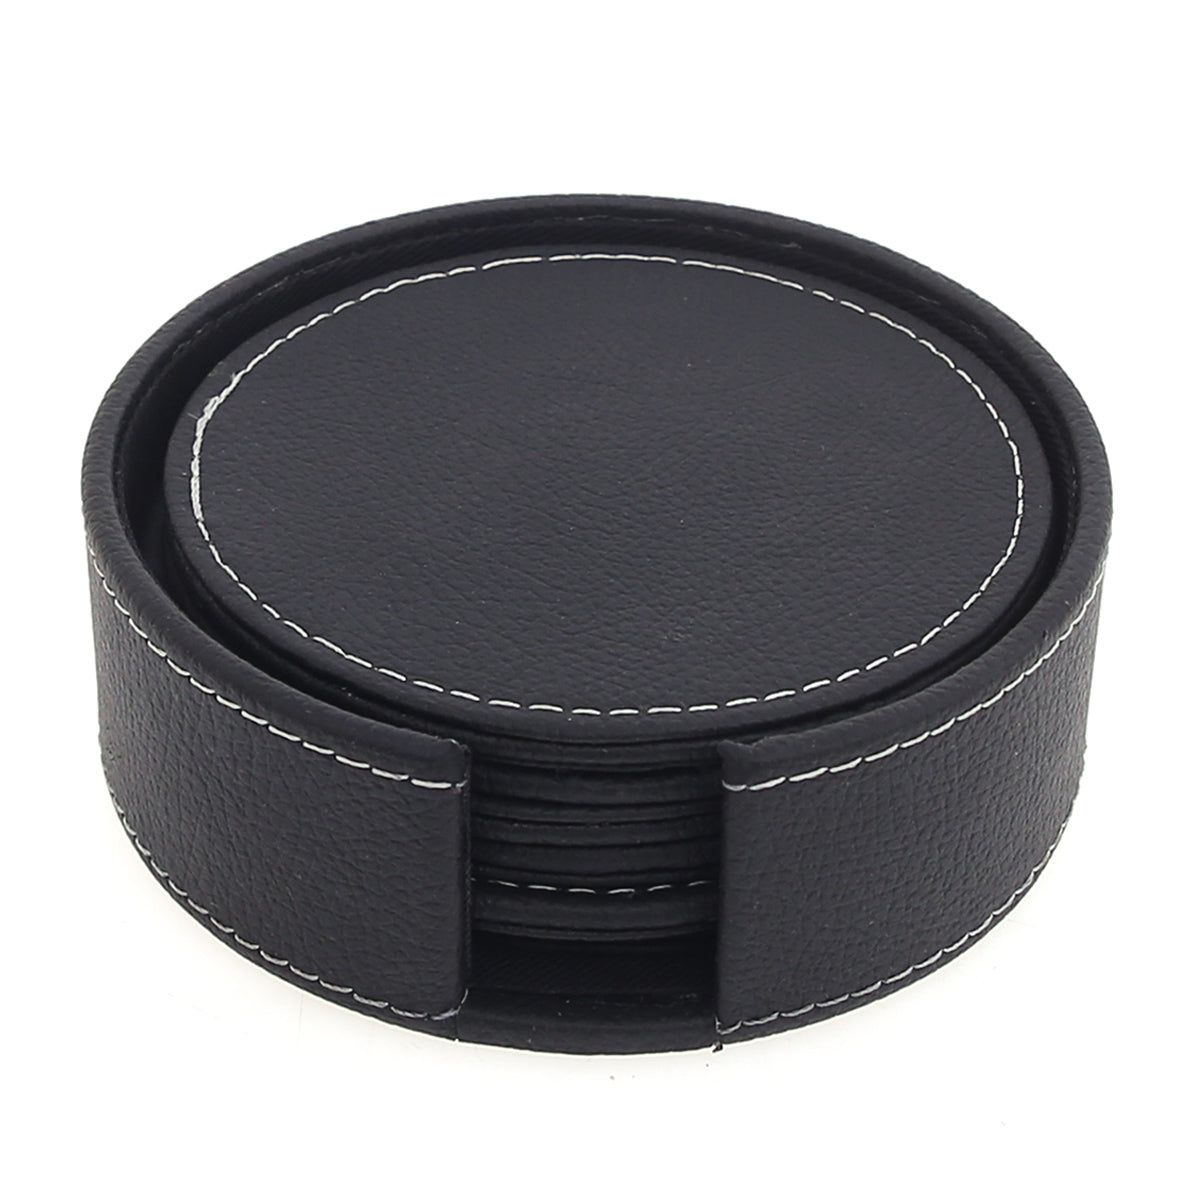 Round Leather Coasters (Black)